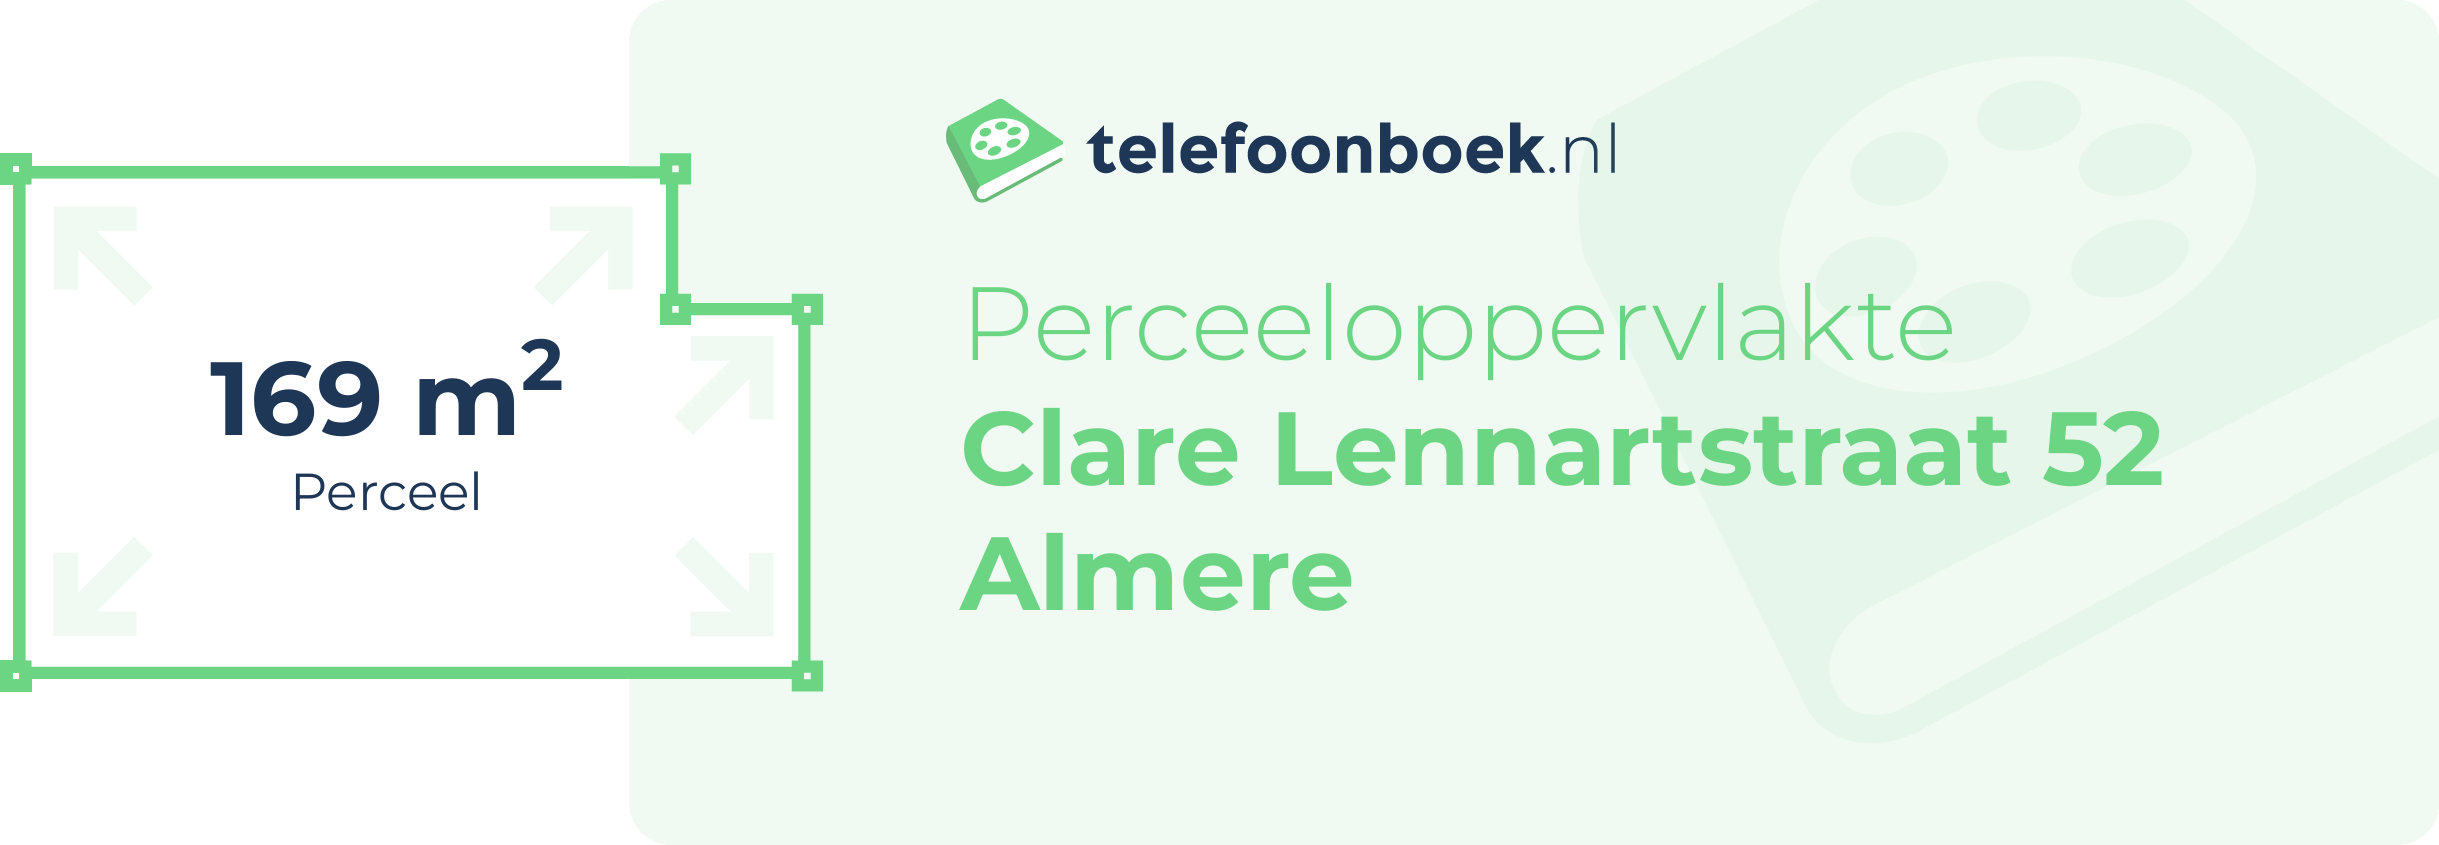 Perceeloppervlakte Clare Lennartstraat 52 Almere